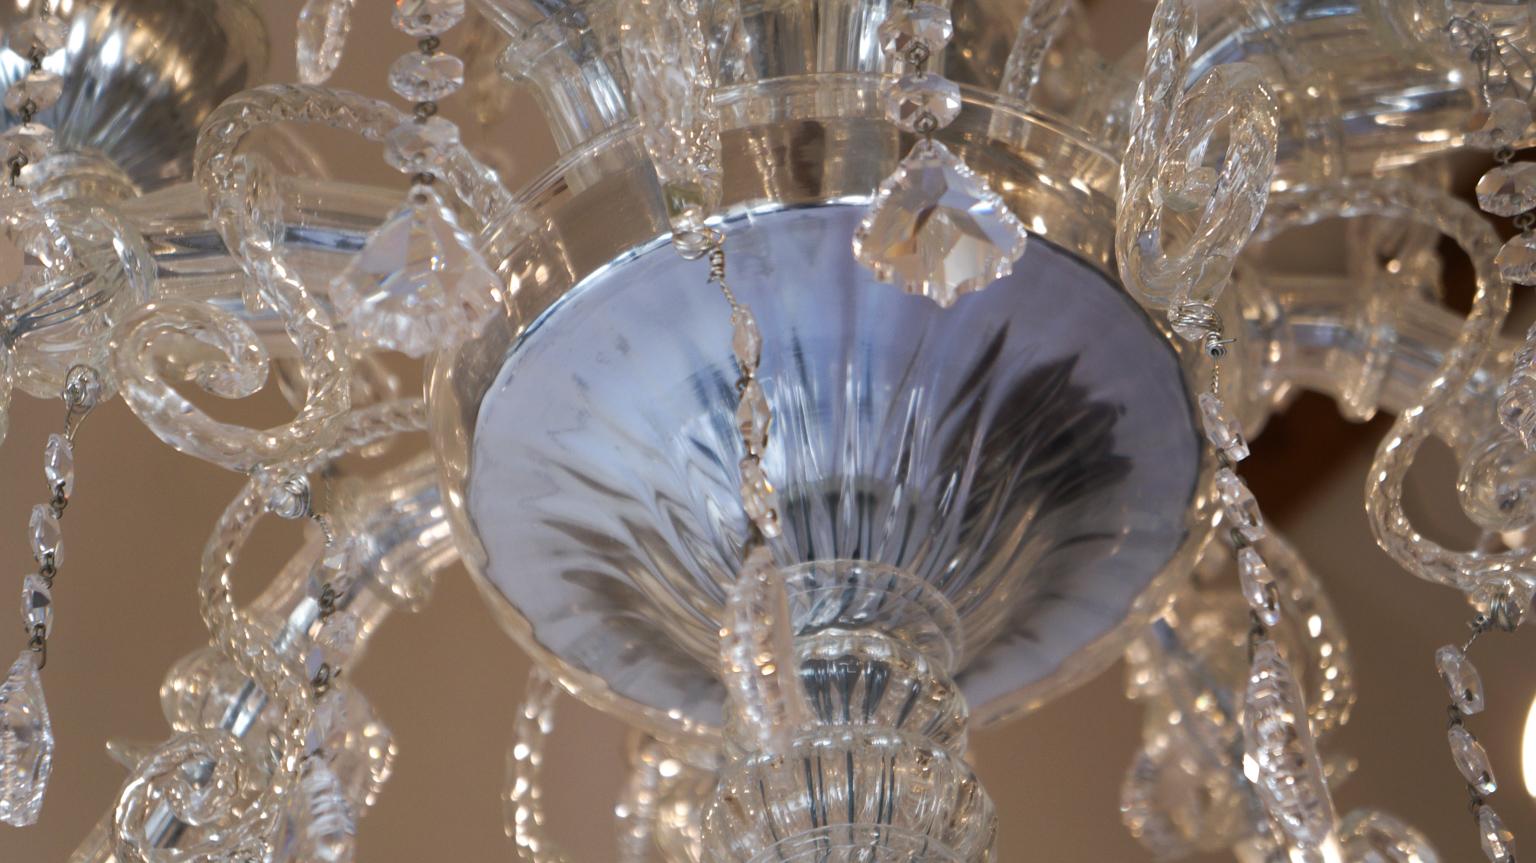 Toso Mid-Century Modern Crystal Ca' Rezzonico Murano Glass Chandelier, 1989 For Sale 8